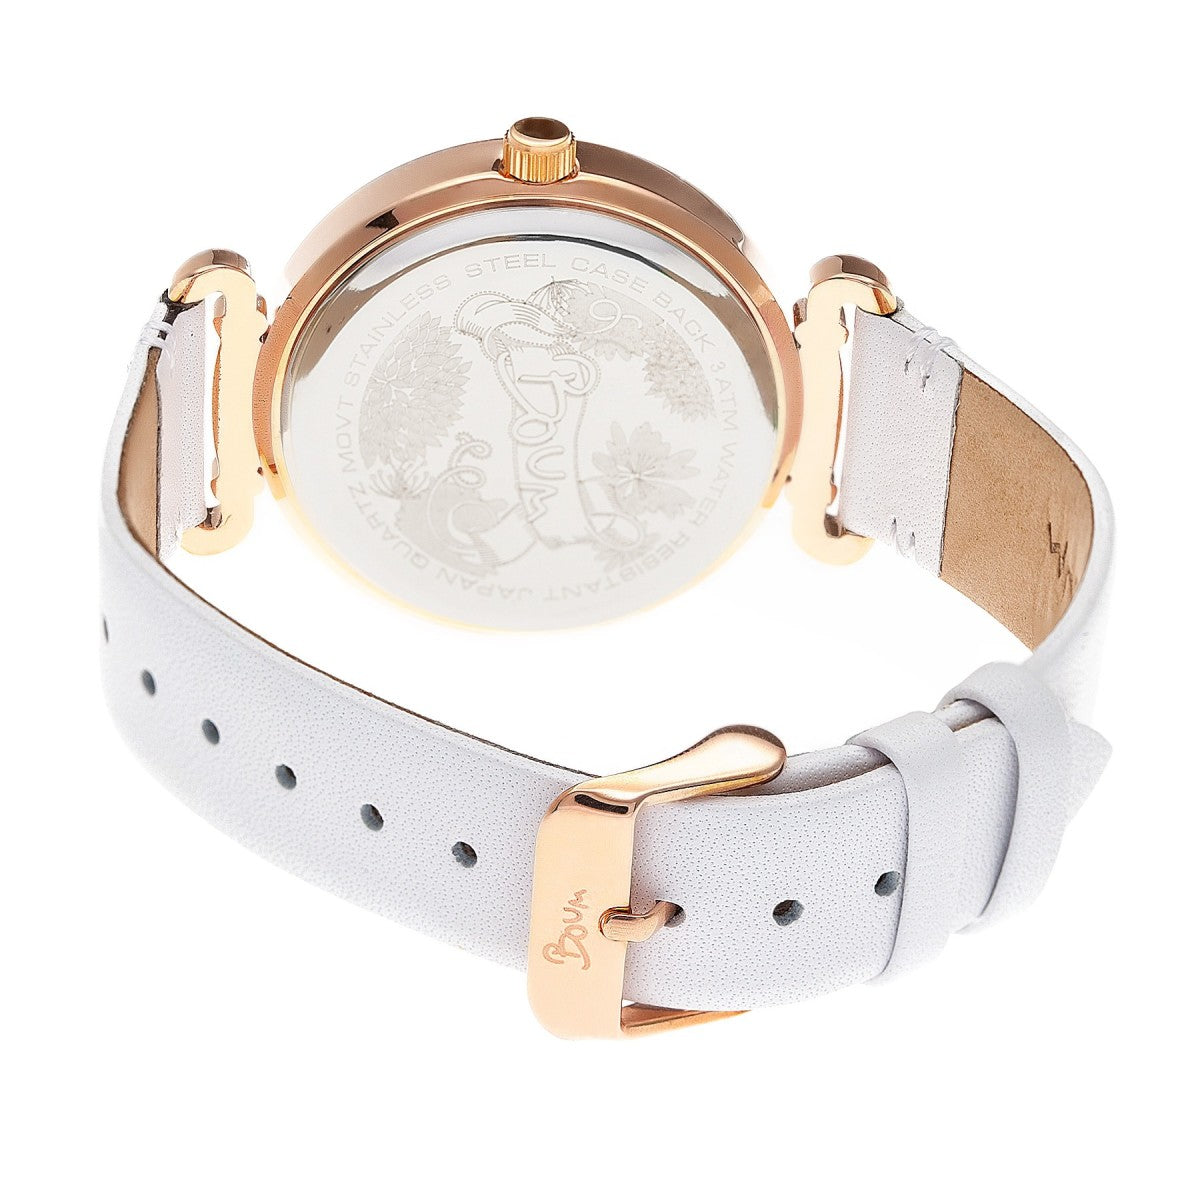 Boum Lumiere Leather-Band Watch - White - BOUBM4305